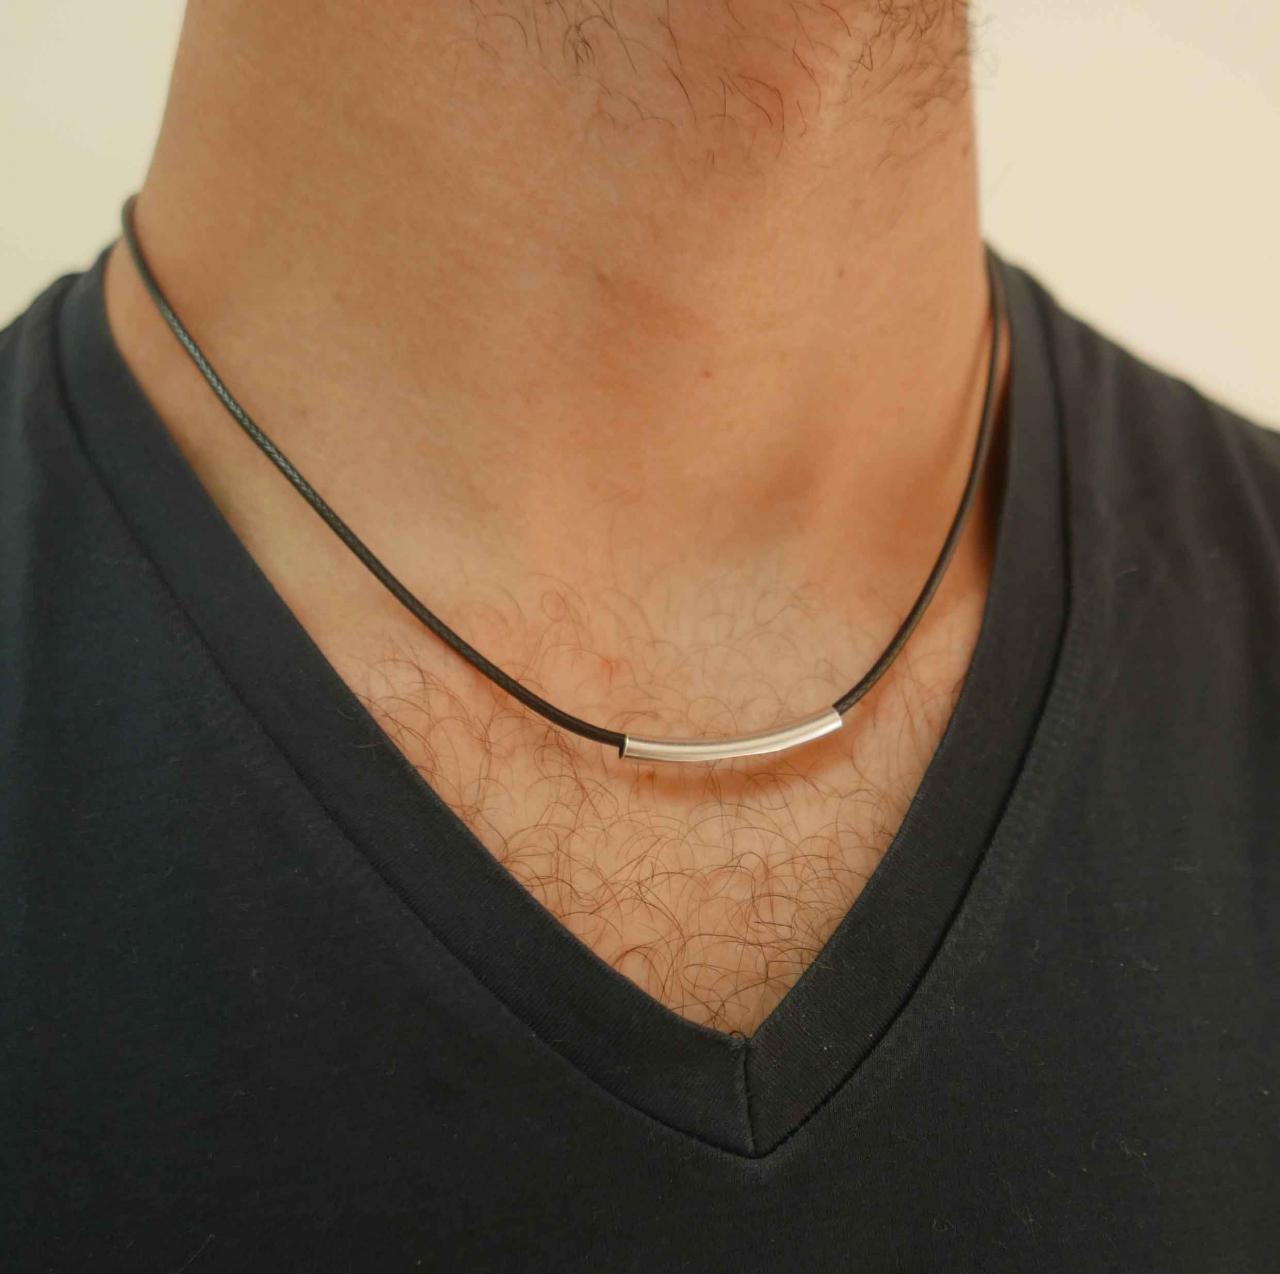 Men's Necklace - Men's Silver Necklace - Men's Vegan Necklace - Men's Jewelry - Men's Gift -